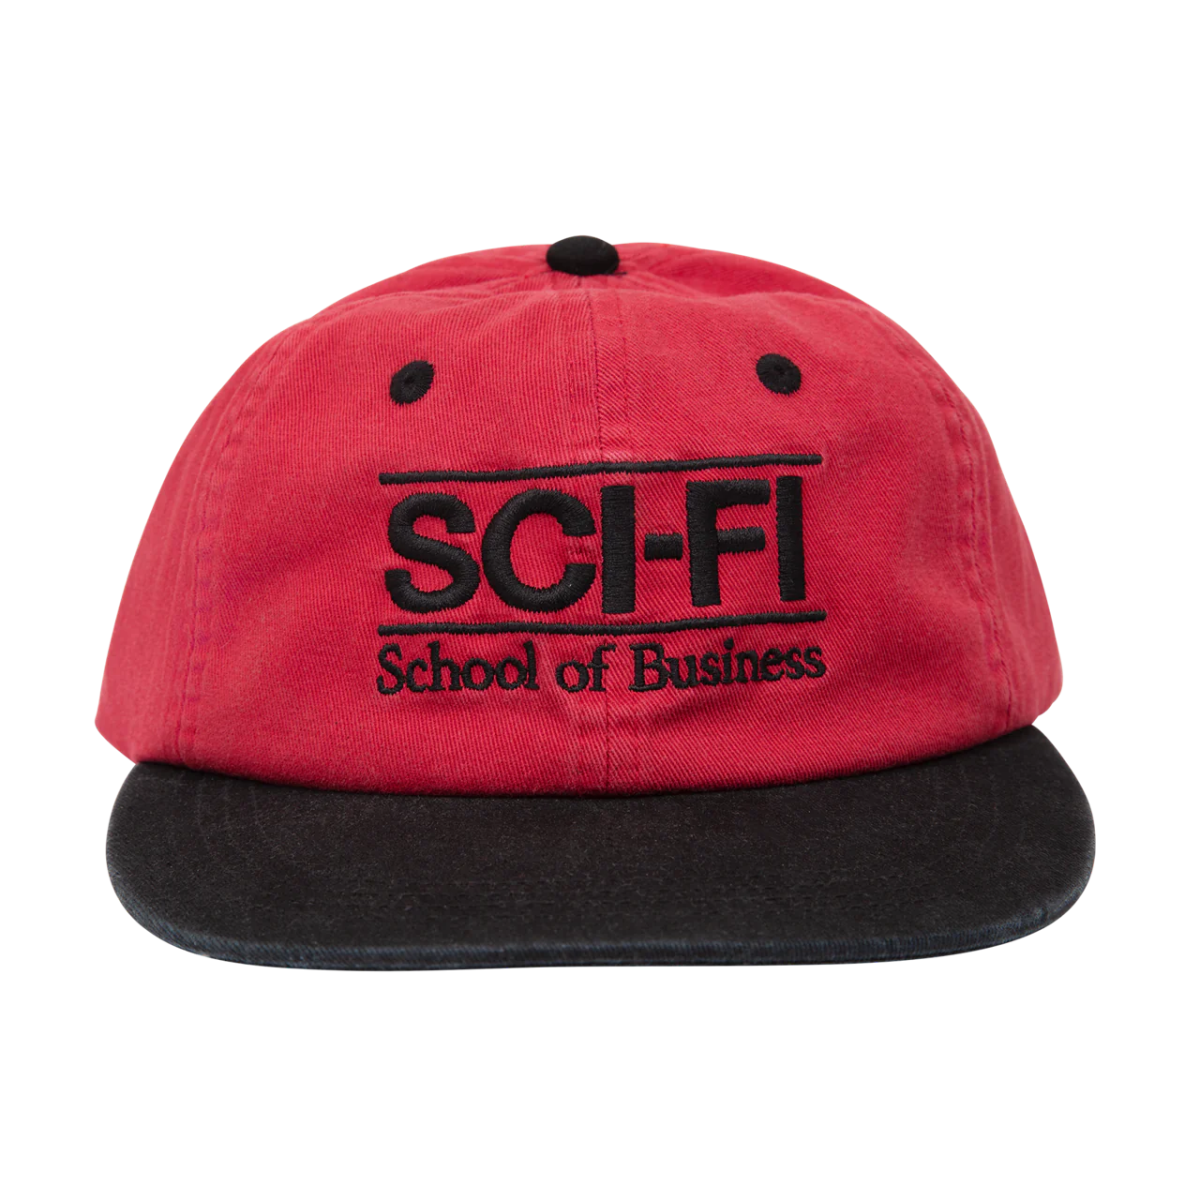 Sci-Fi Fantasy School of Business Hat in Red/Black - Goodnews Skateshop